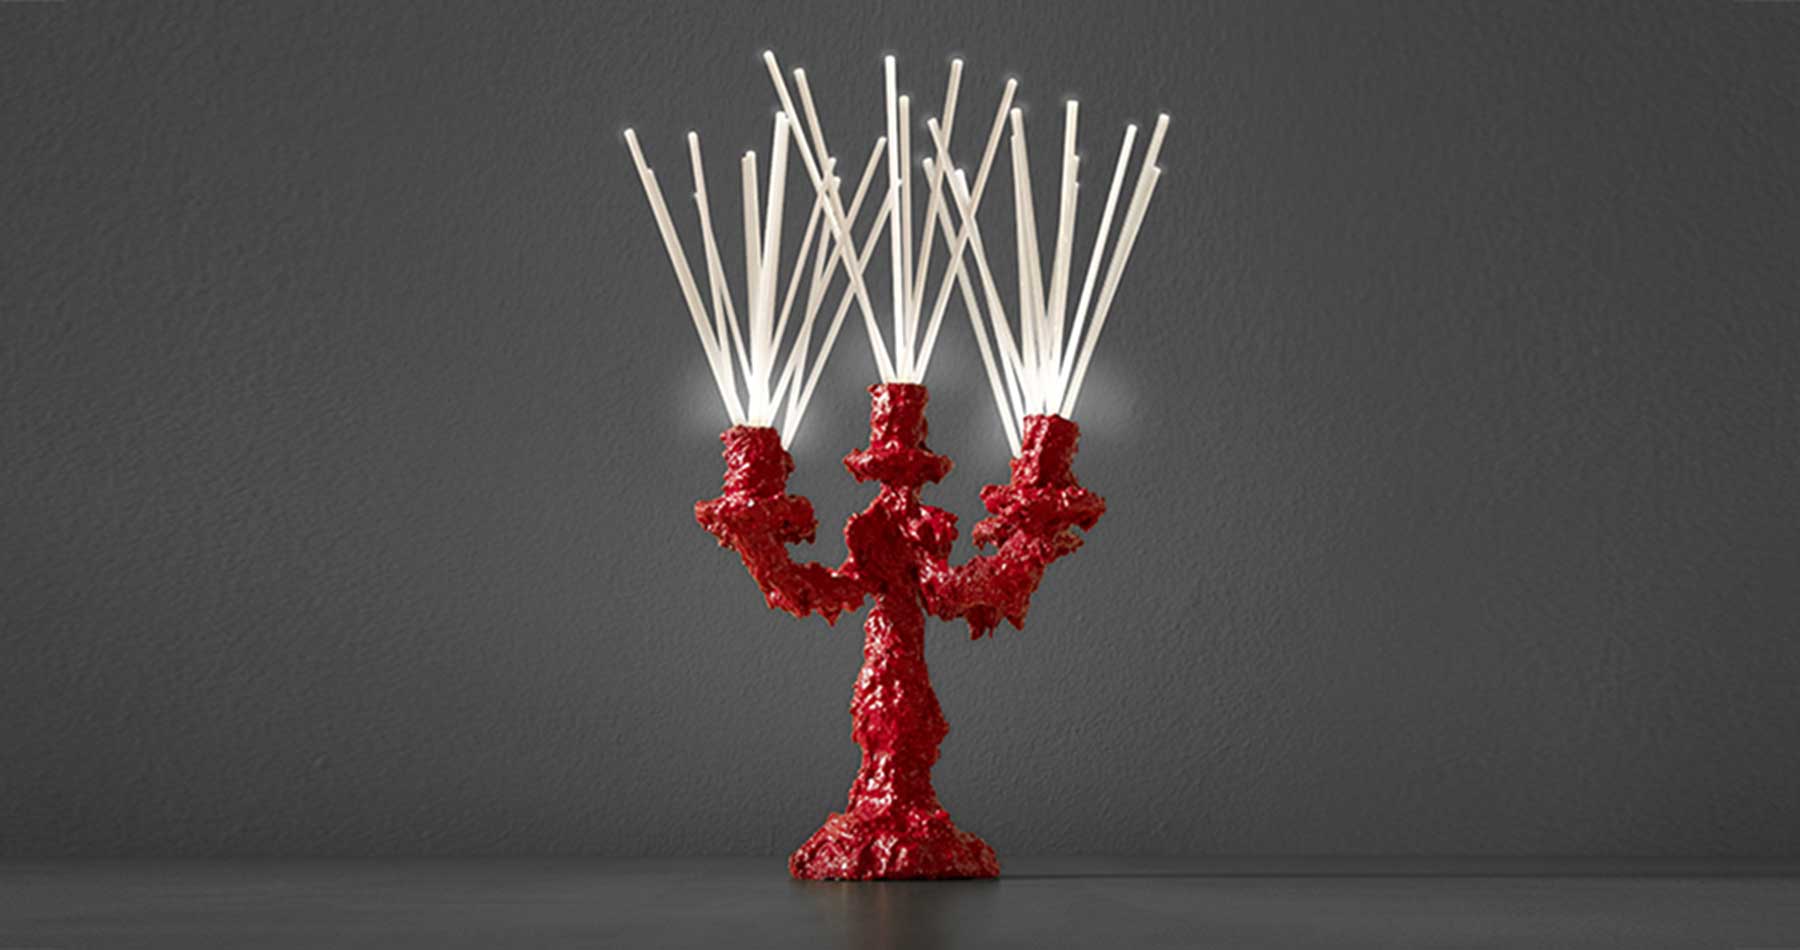 Lamp Secret light, red, photo 2, design by Guerraz, production by LuceControCorrente